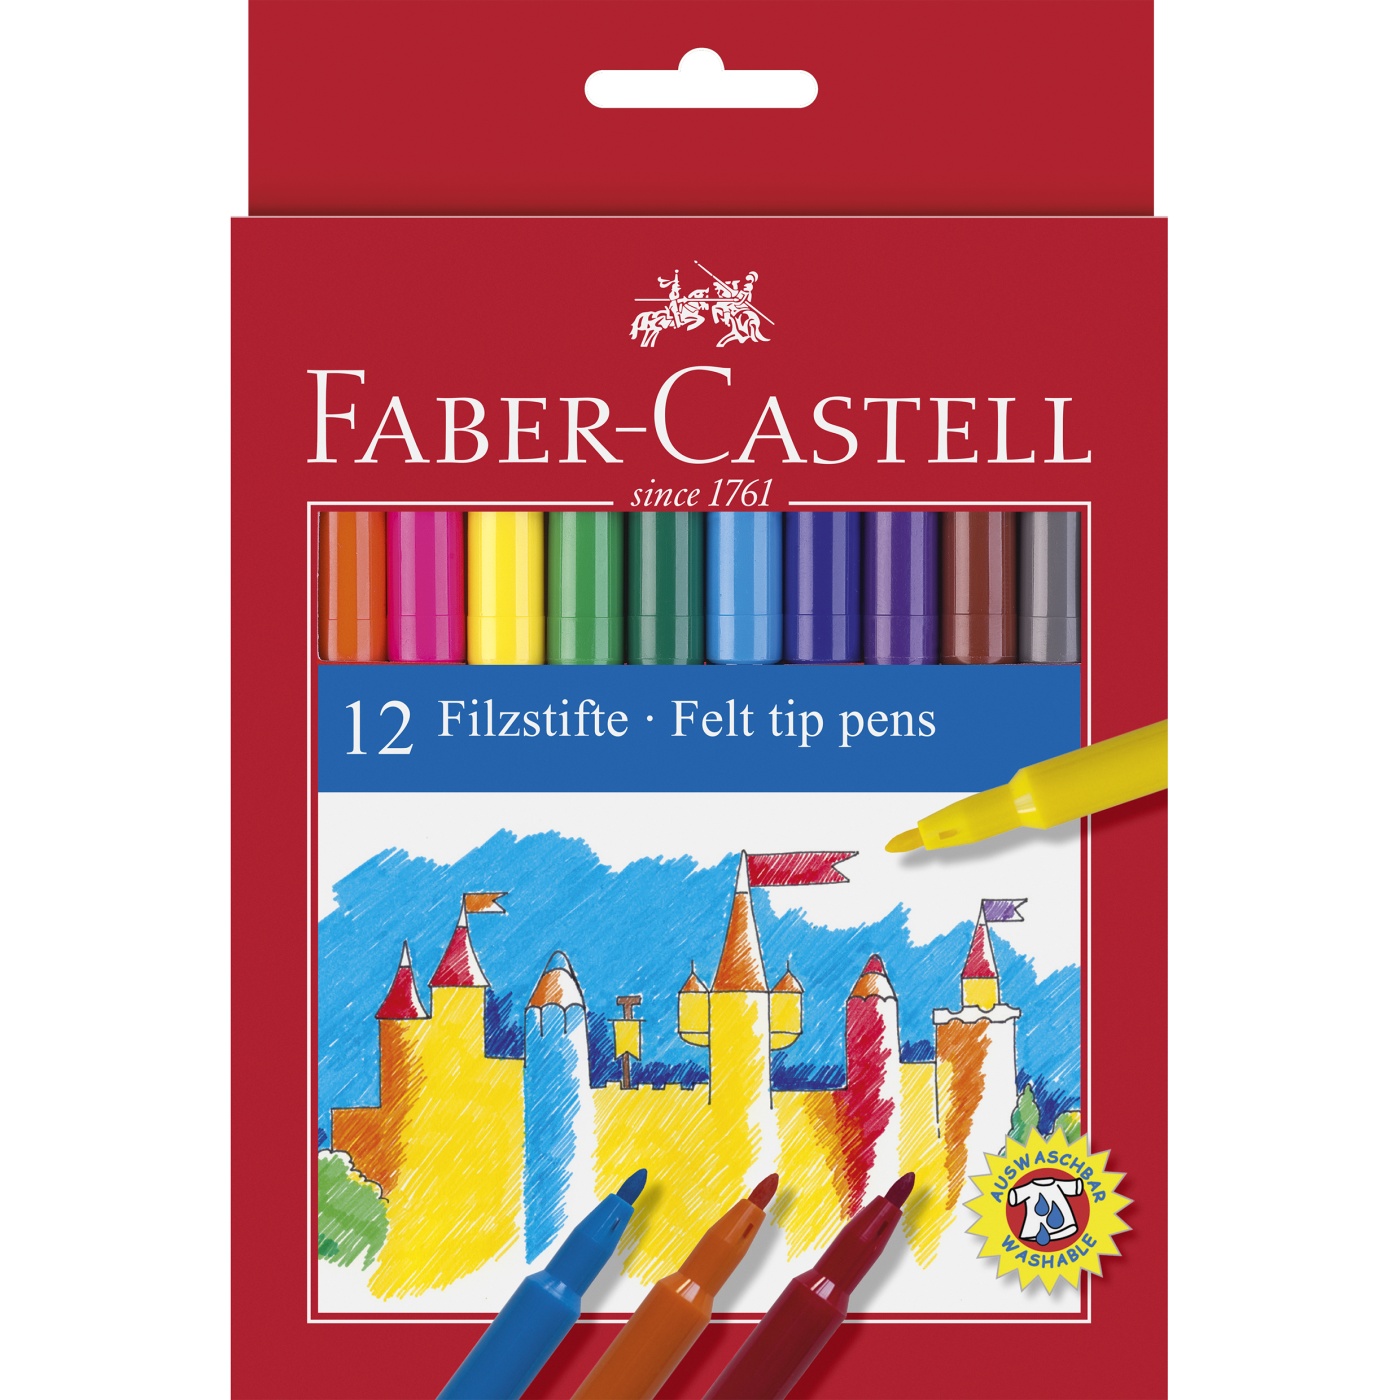 FABER CASTELL - 12 Fiber-Tip Colour Markers Sketch Pens Draw Paint